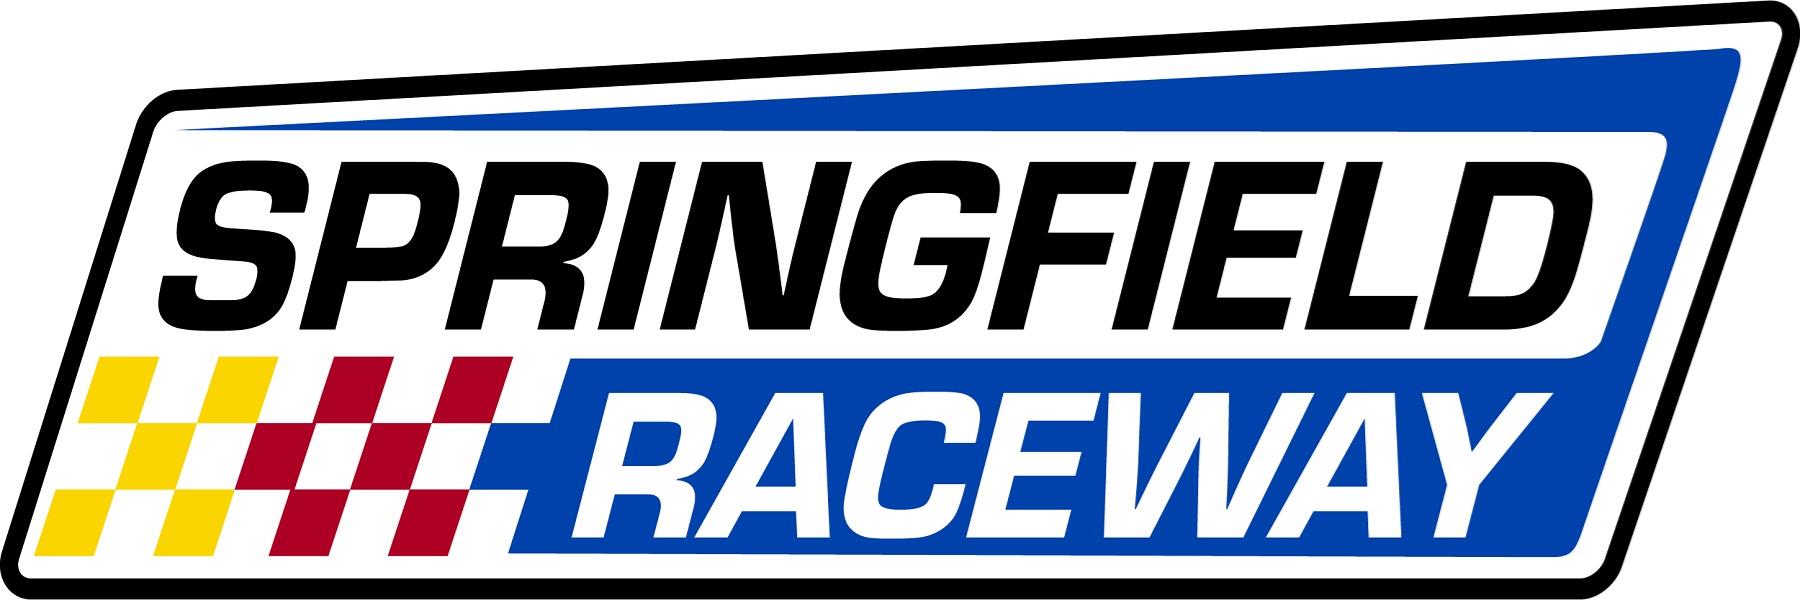 10/3/2021 - Springfield Raceway